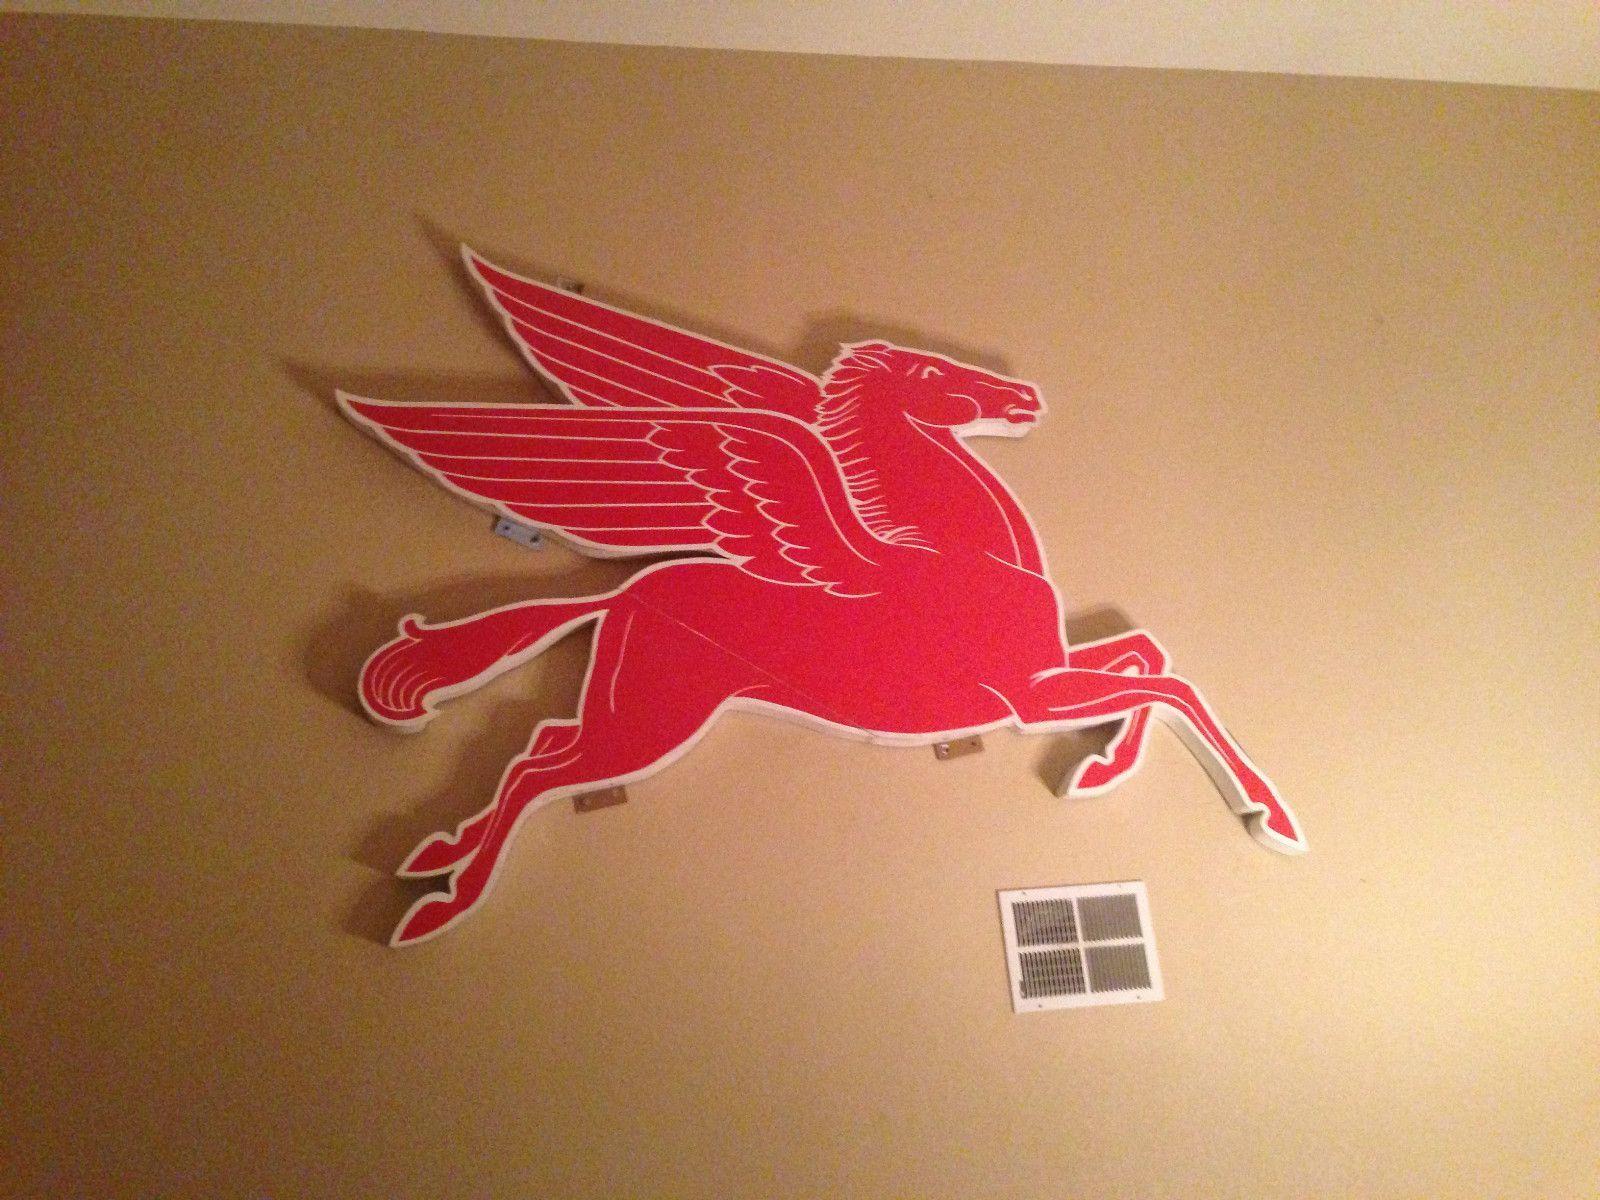 Mobil Flying Red Horse Logo - Mobil Pegasus Flying Red Horse Giant Porcelain Sign. Petroliana